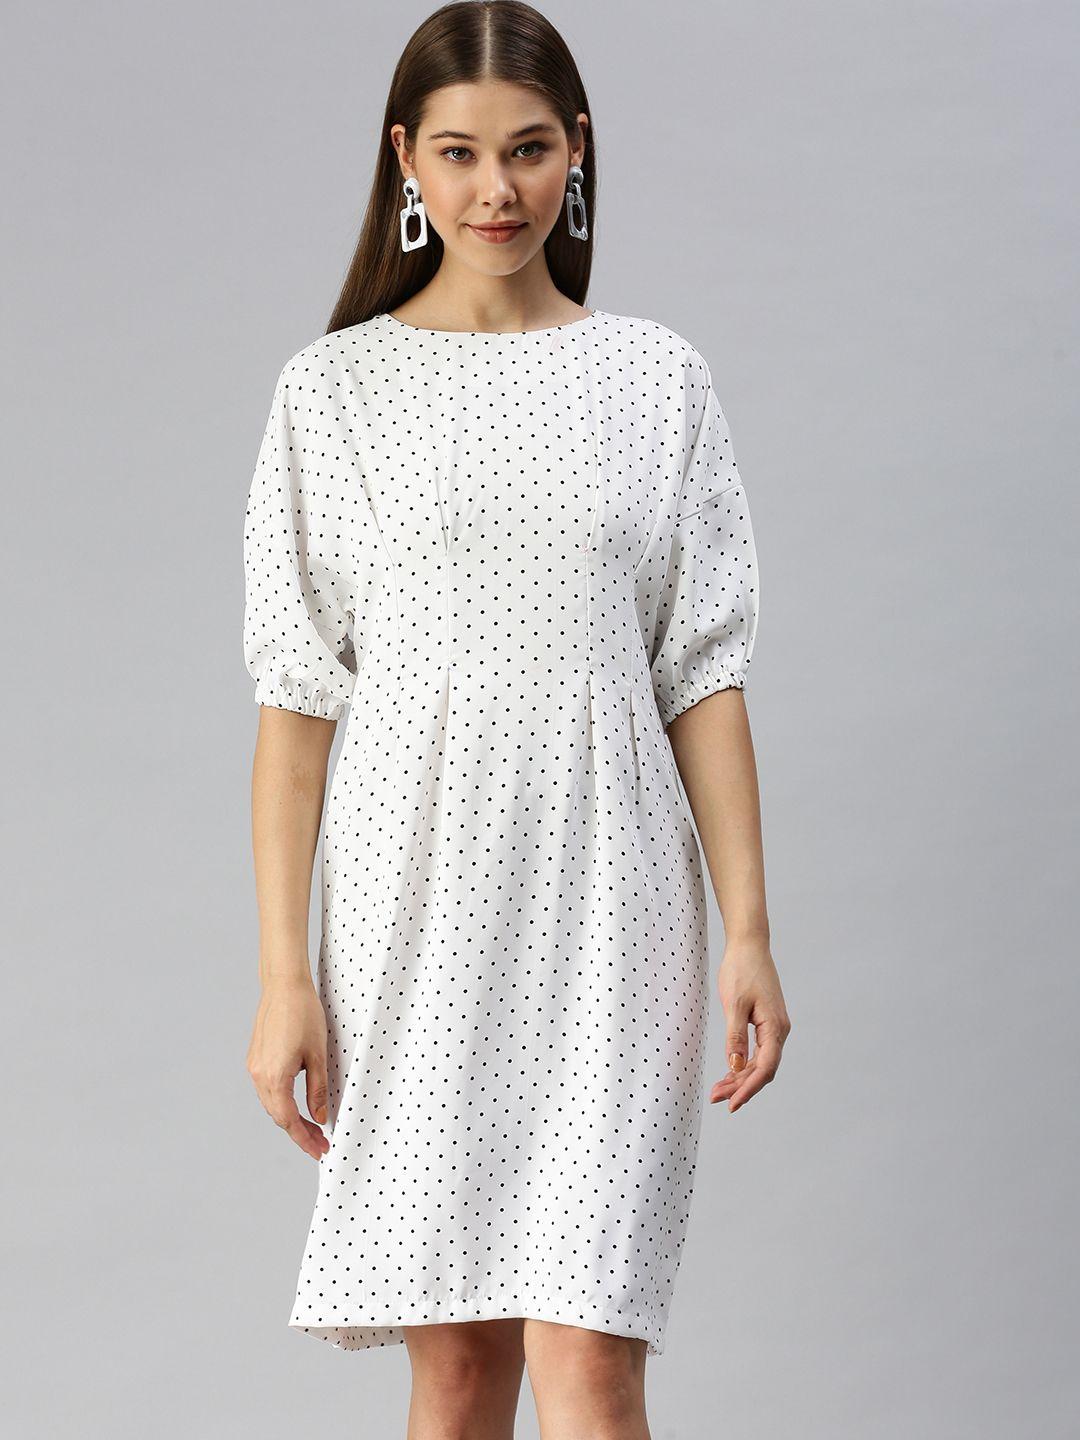 showoff-white-&-black-printed-crepe-a-line-dress